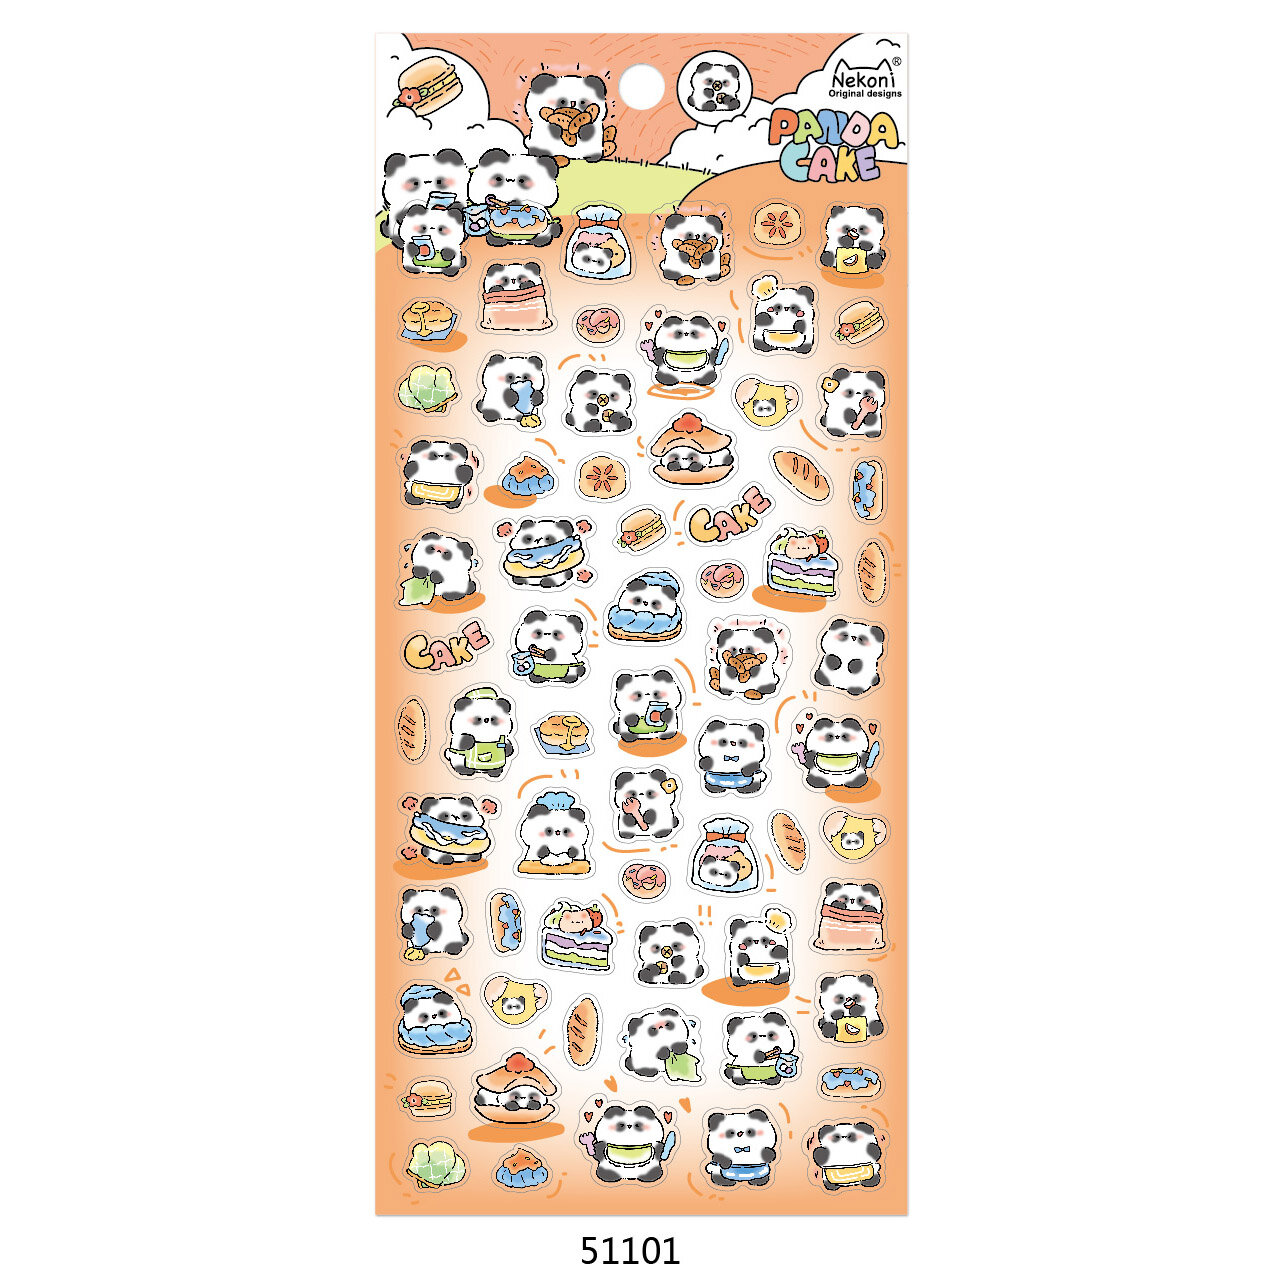 Stickers - Panda cake (51101)